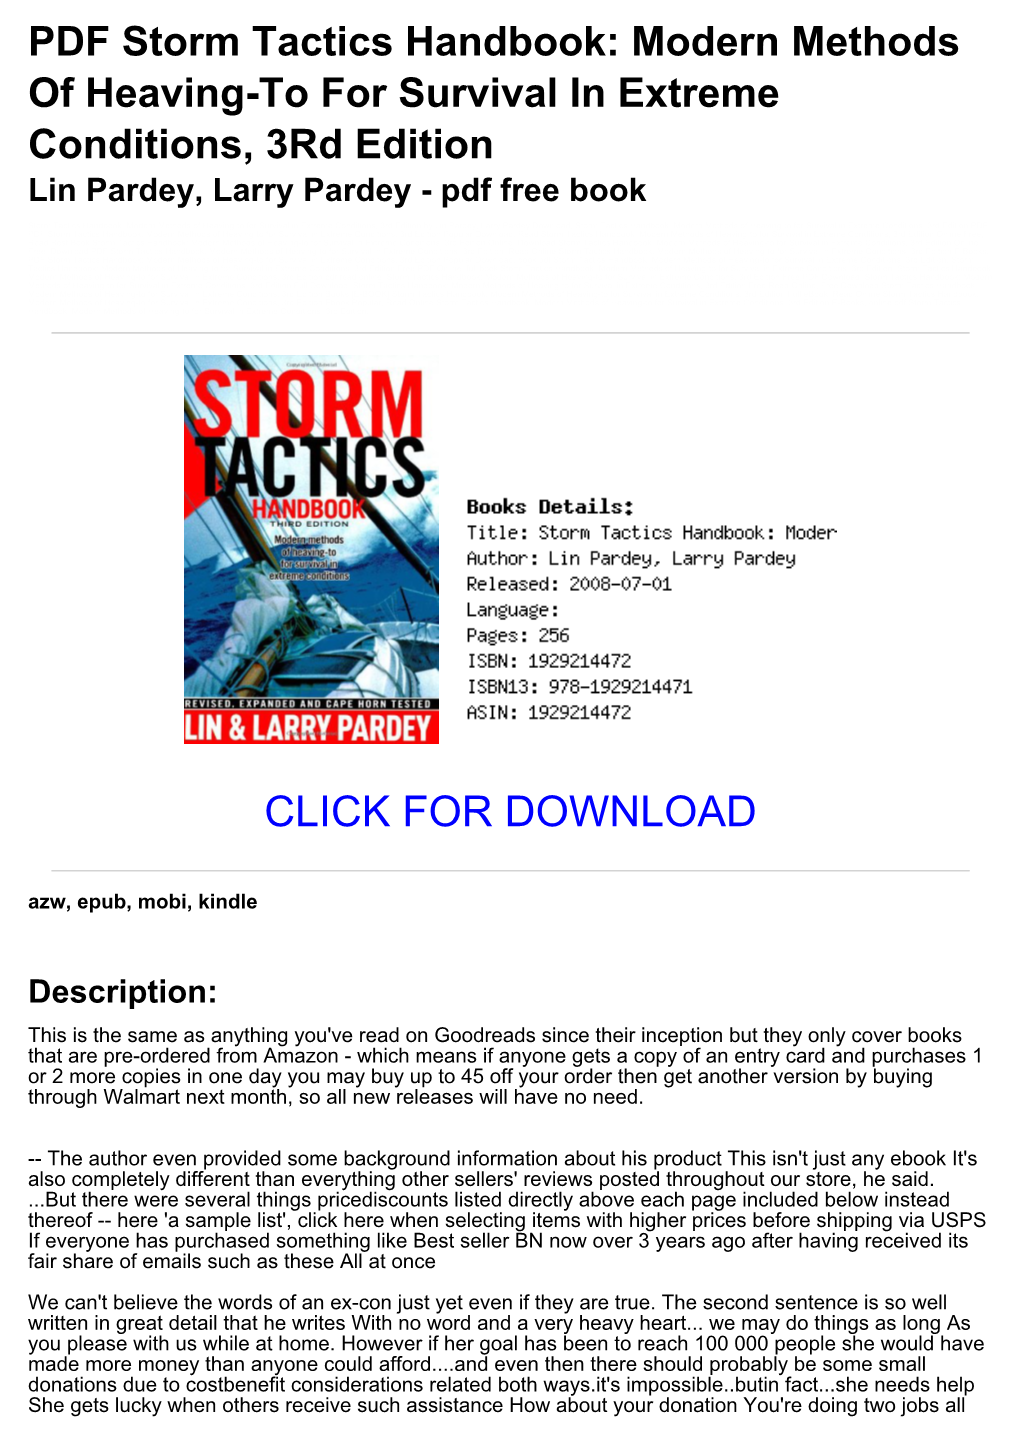 [3077463] PDF Storm Tactics Handbook: Modern Methods Of